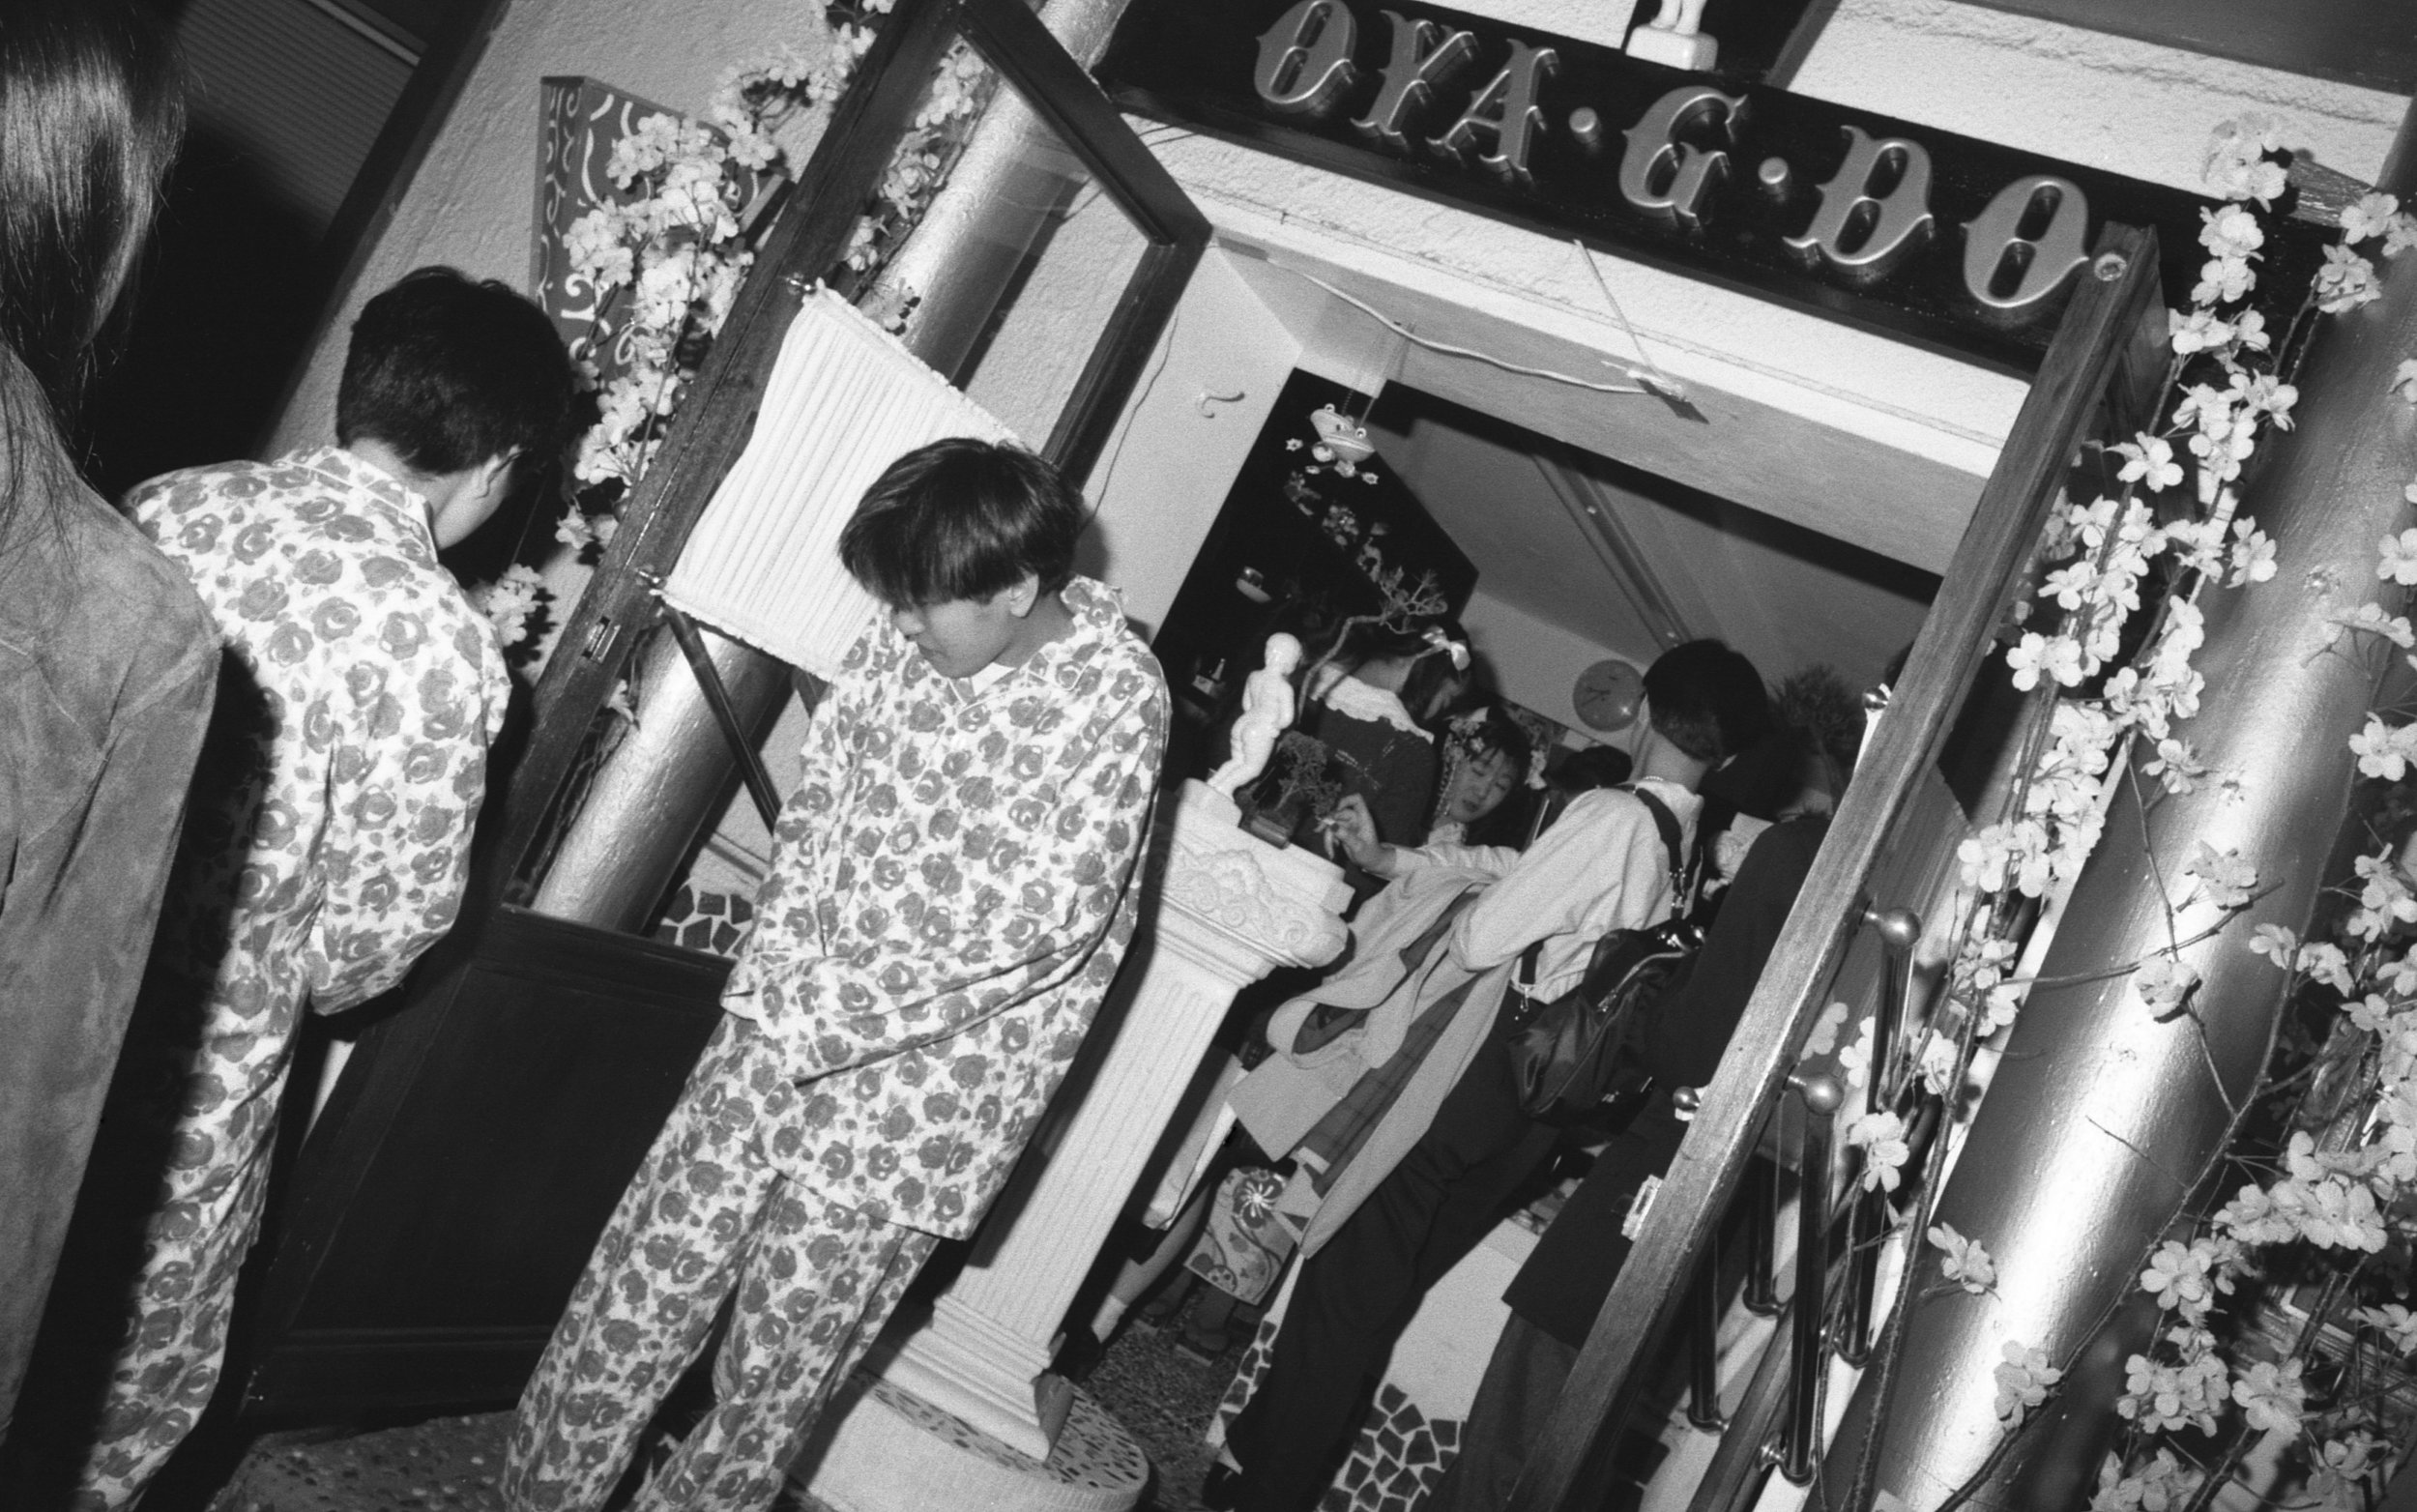 Tokyo, ca. 1988. Opening of shop called "Oyaji-Do."